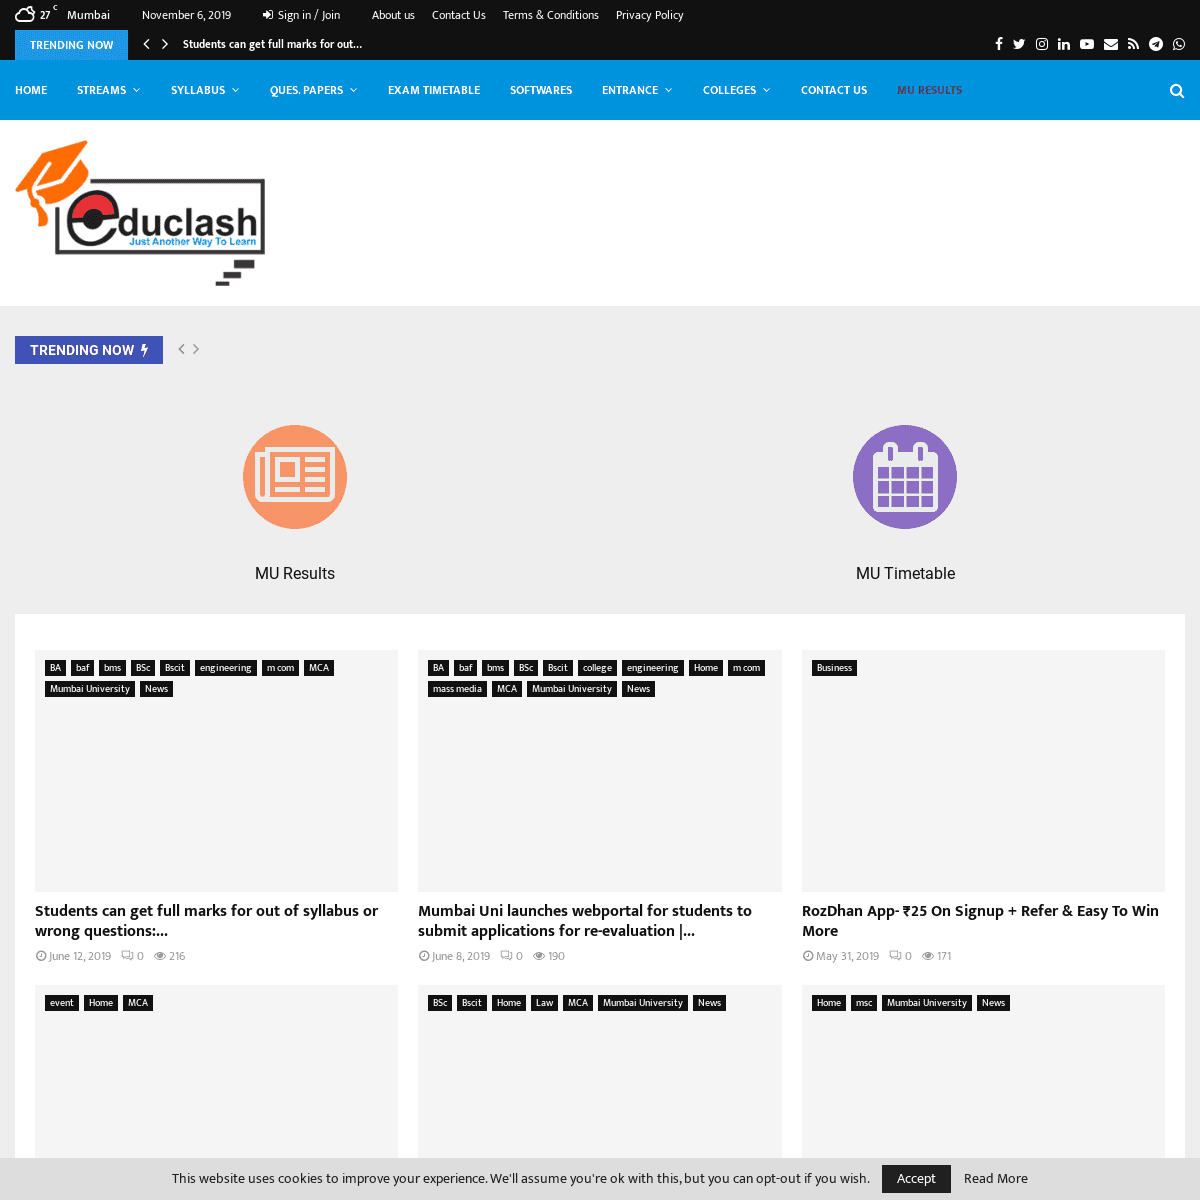 A complete backup of educlash.com